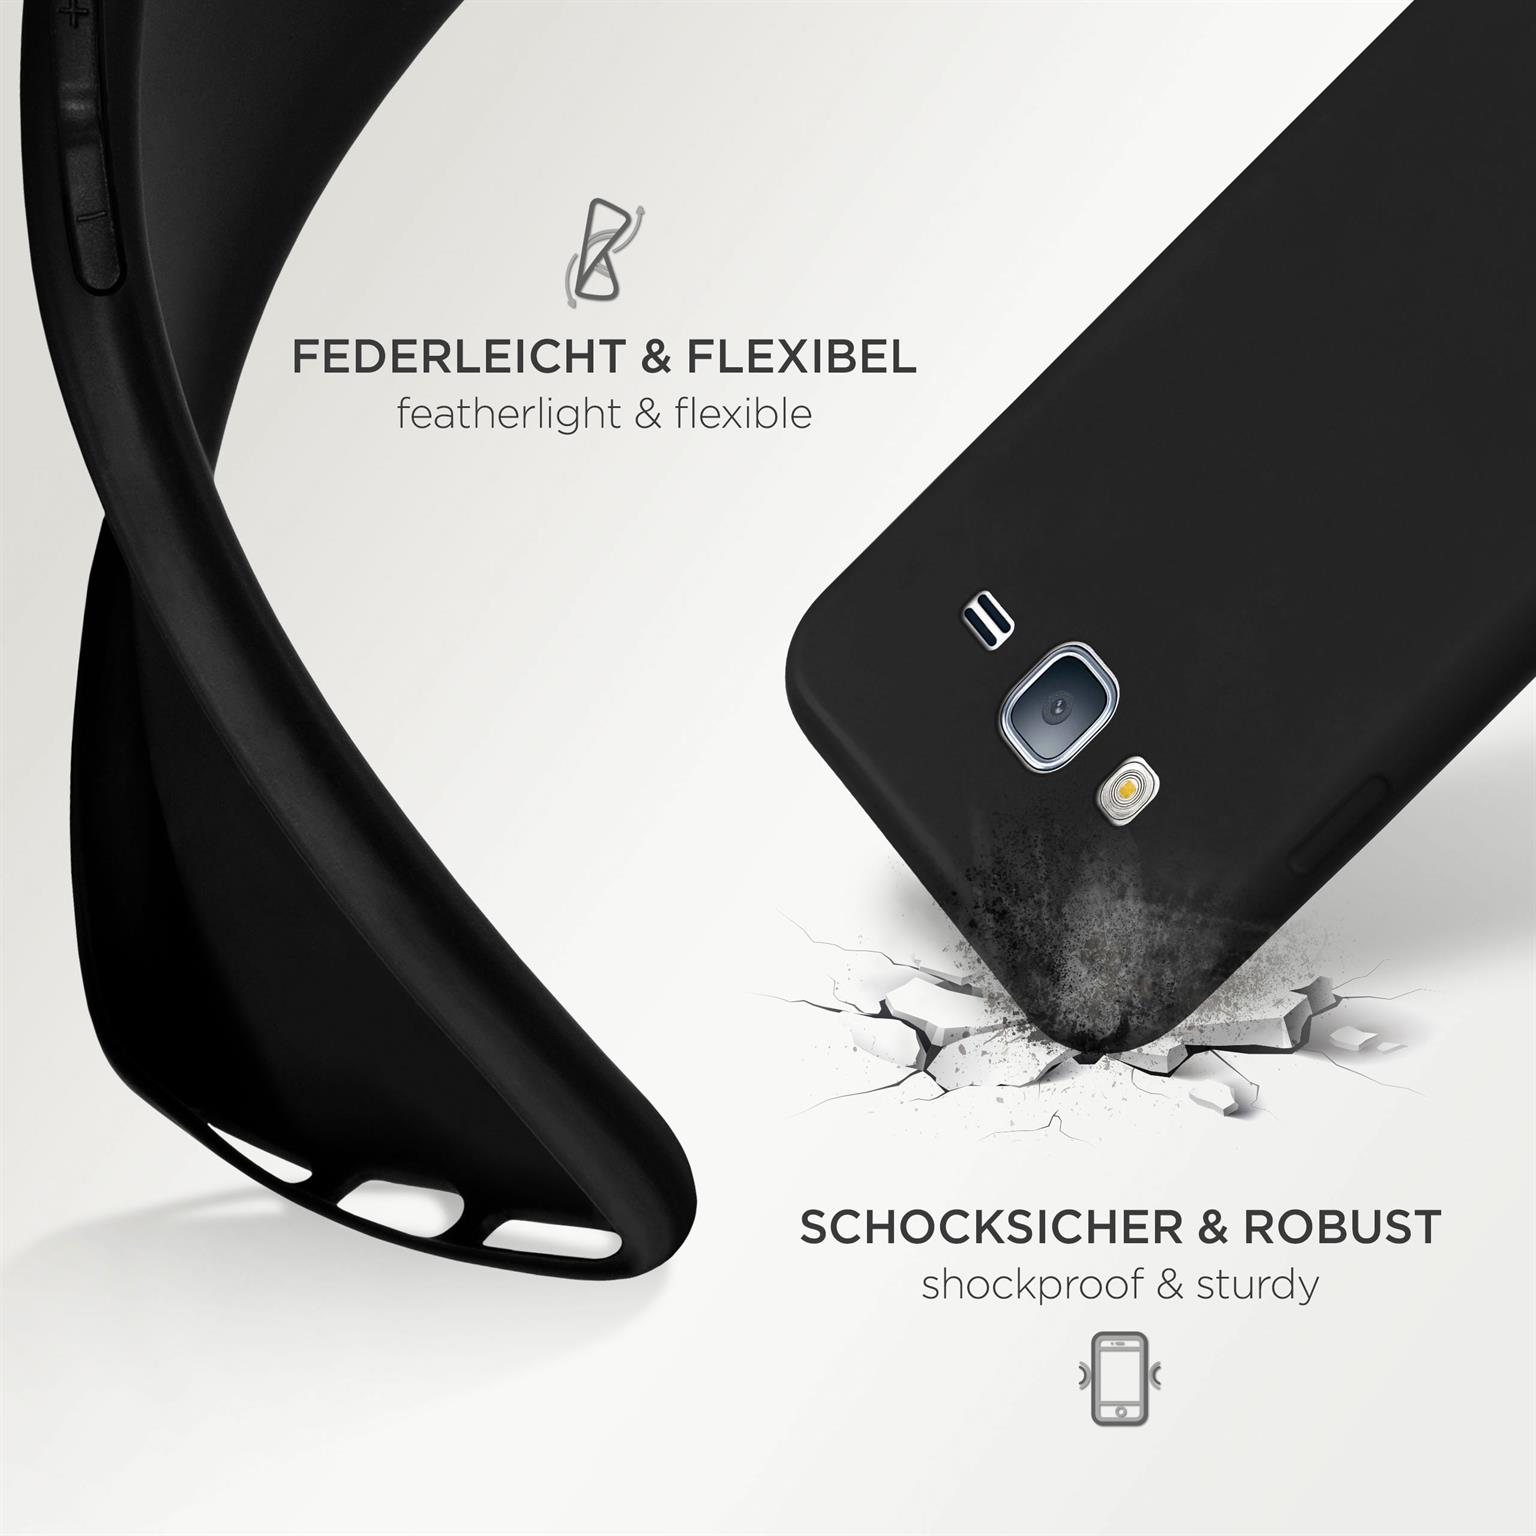 SlimShield Case, Galaxy Backcover, Pro J3 Schwarz Samsung, (2016), ONEFLOW